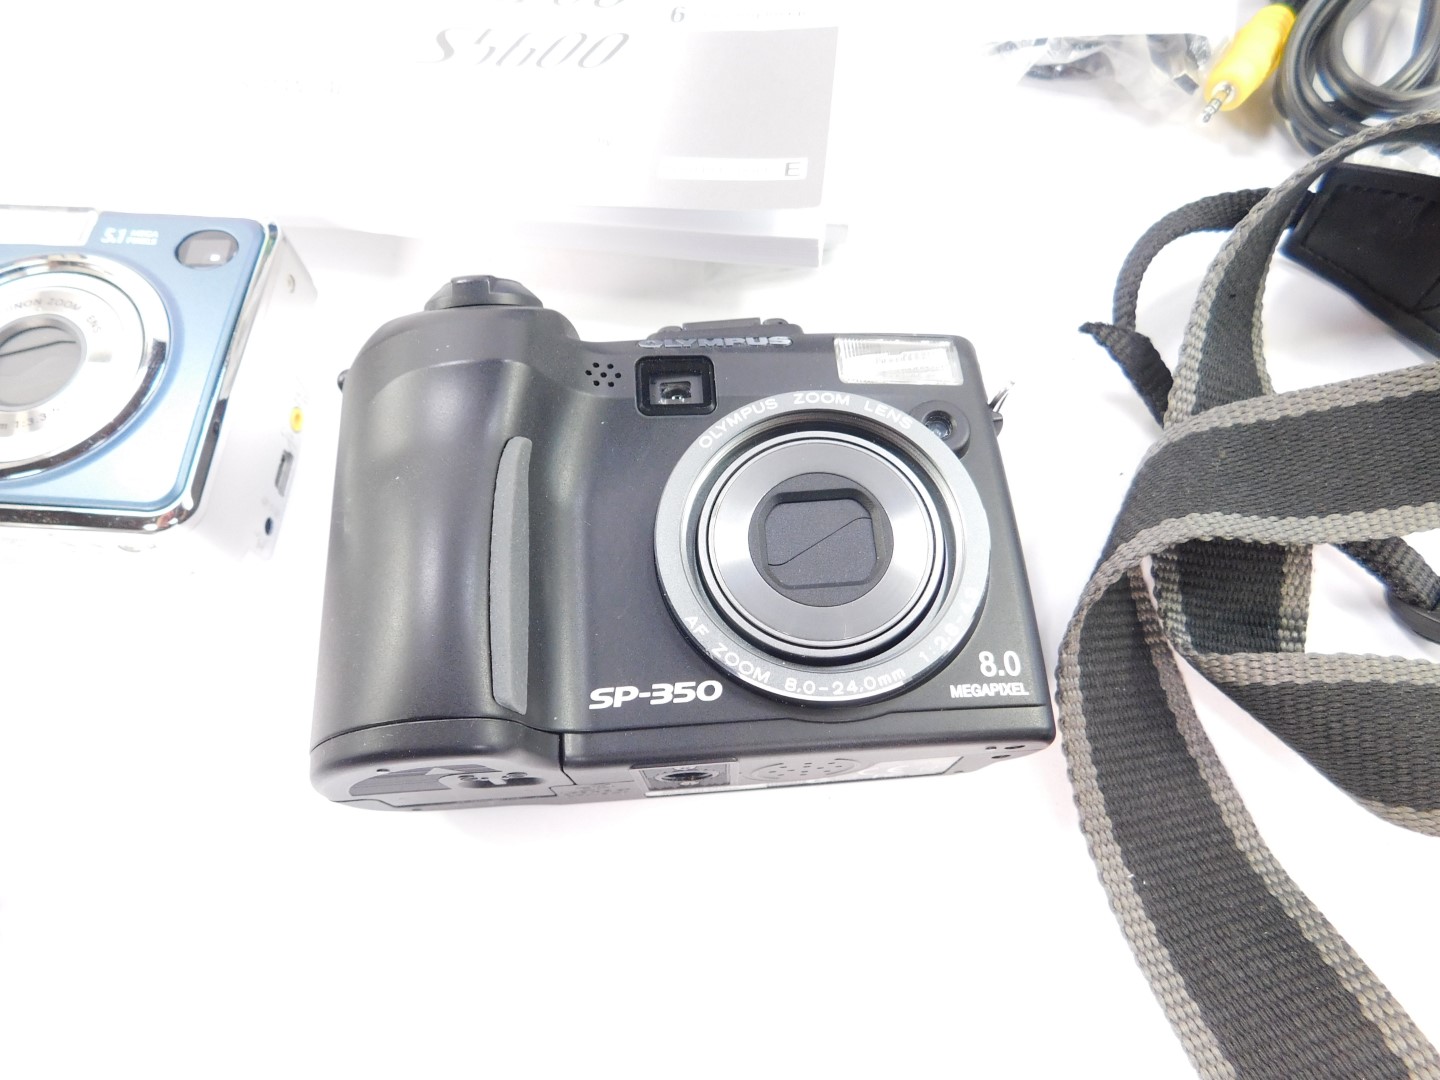 A Fujifilm Fine Pix S5600 digital camera, an Olympus SP-350 digital compact camera, Fujifilm Fine - Image 3 of 4